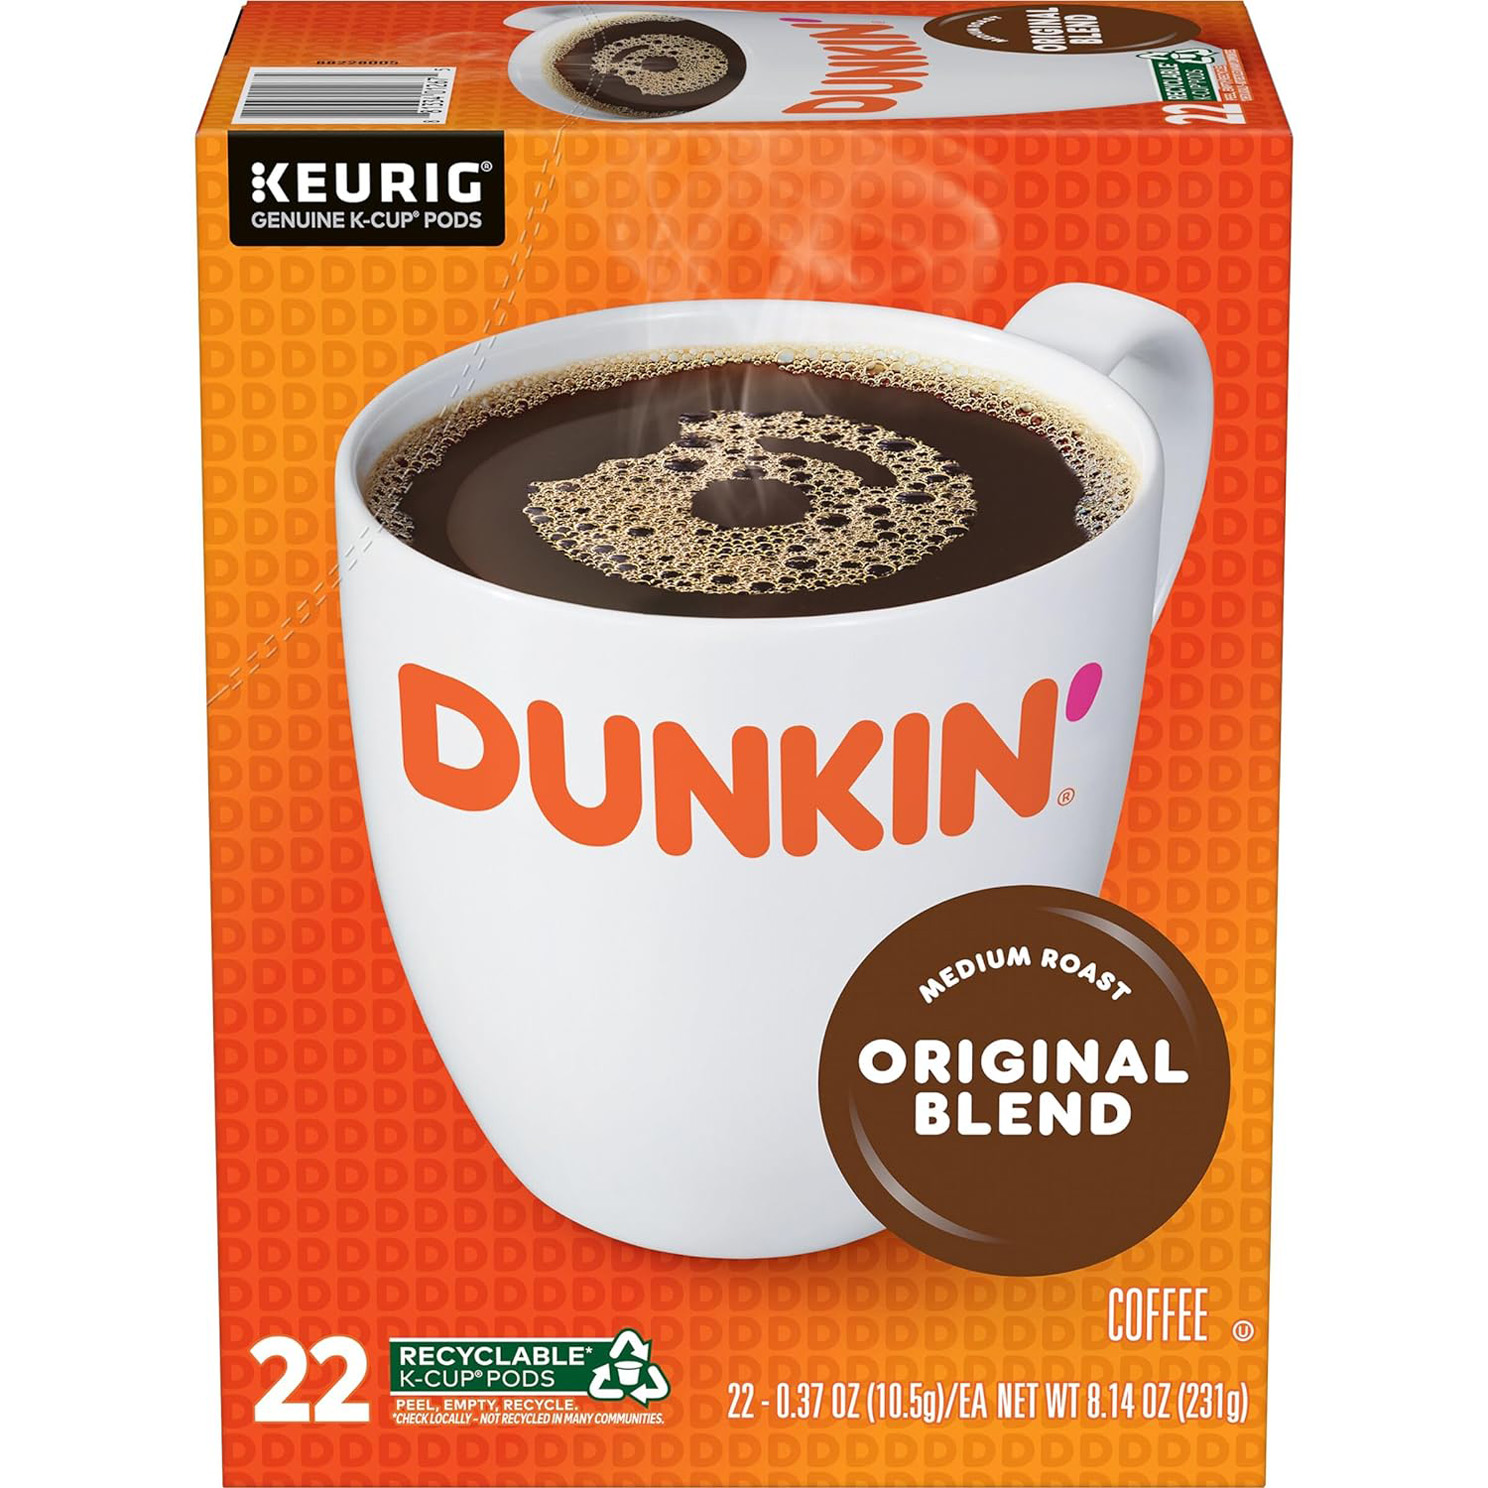 Dunkin’ Original Blend Medium Roast Coffee, 88 Count K-Cup Pods